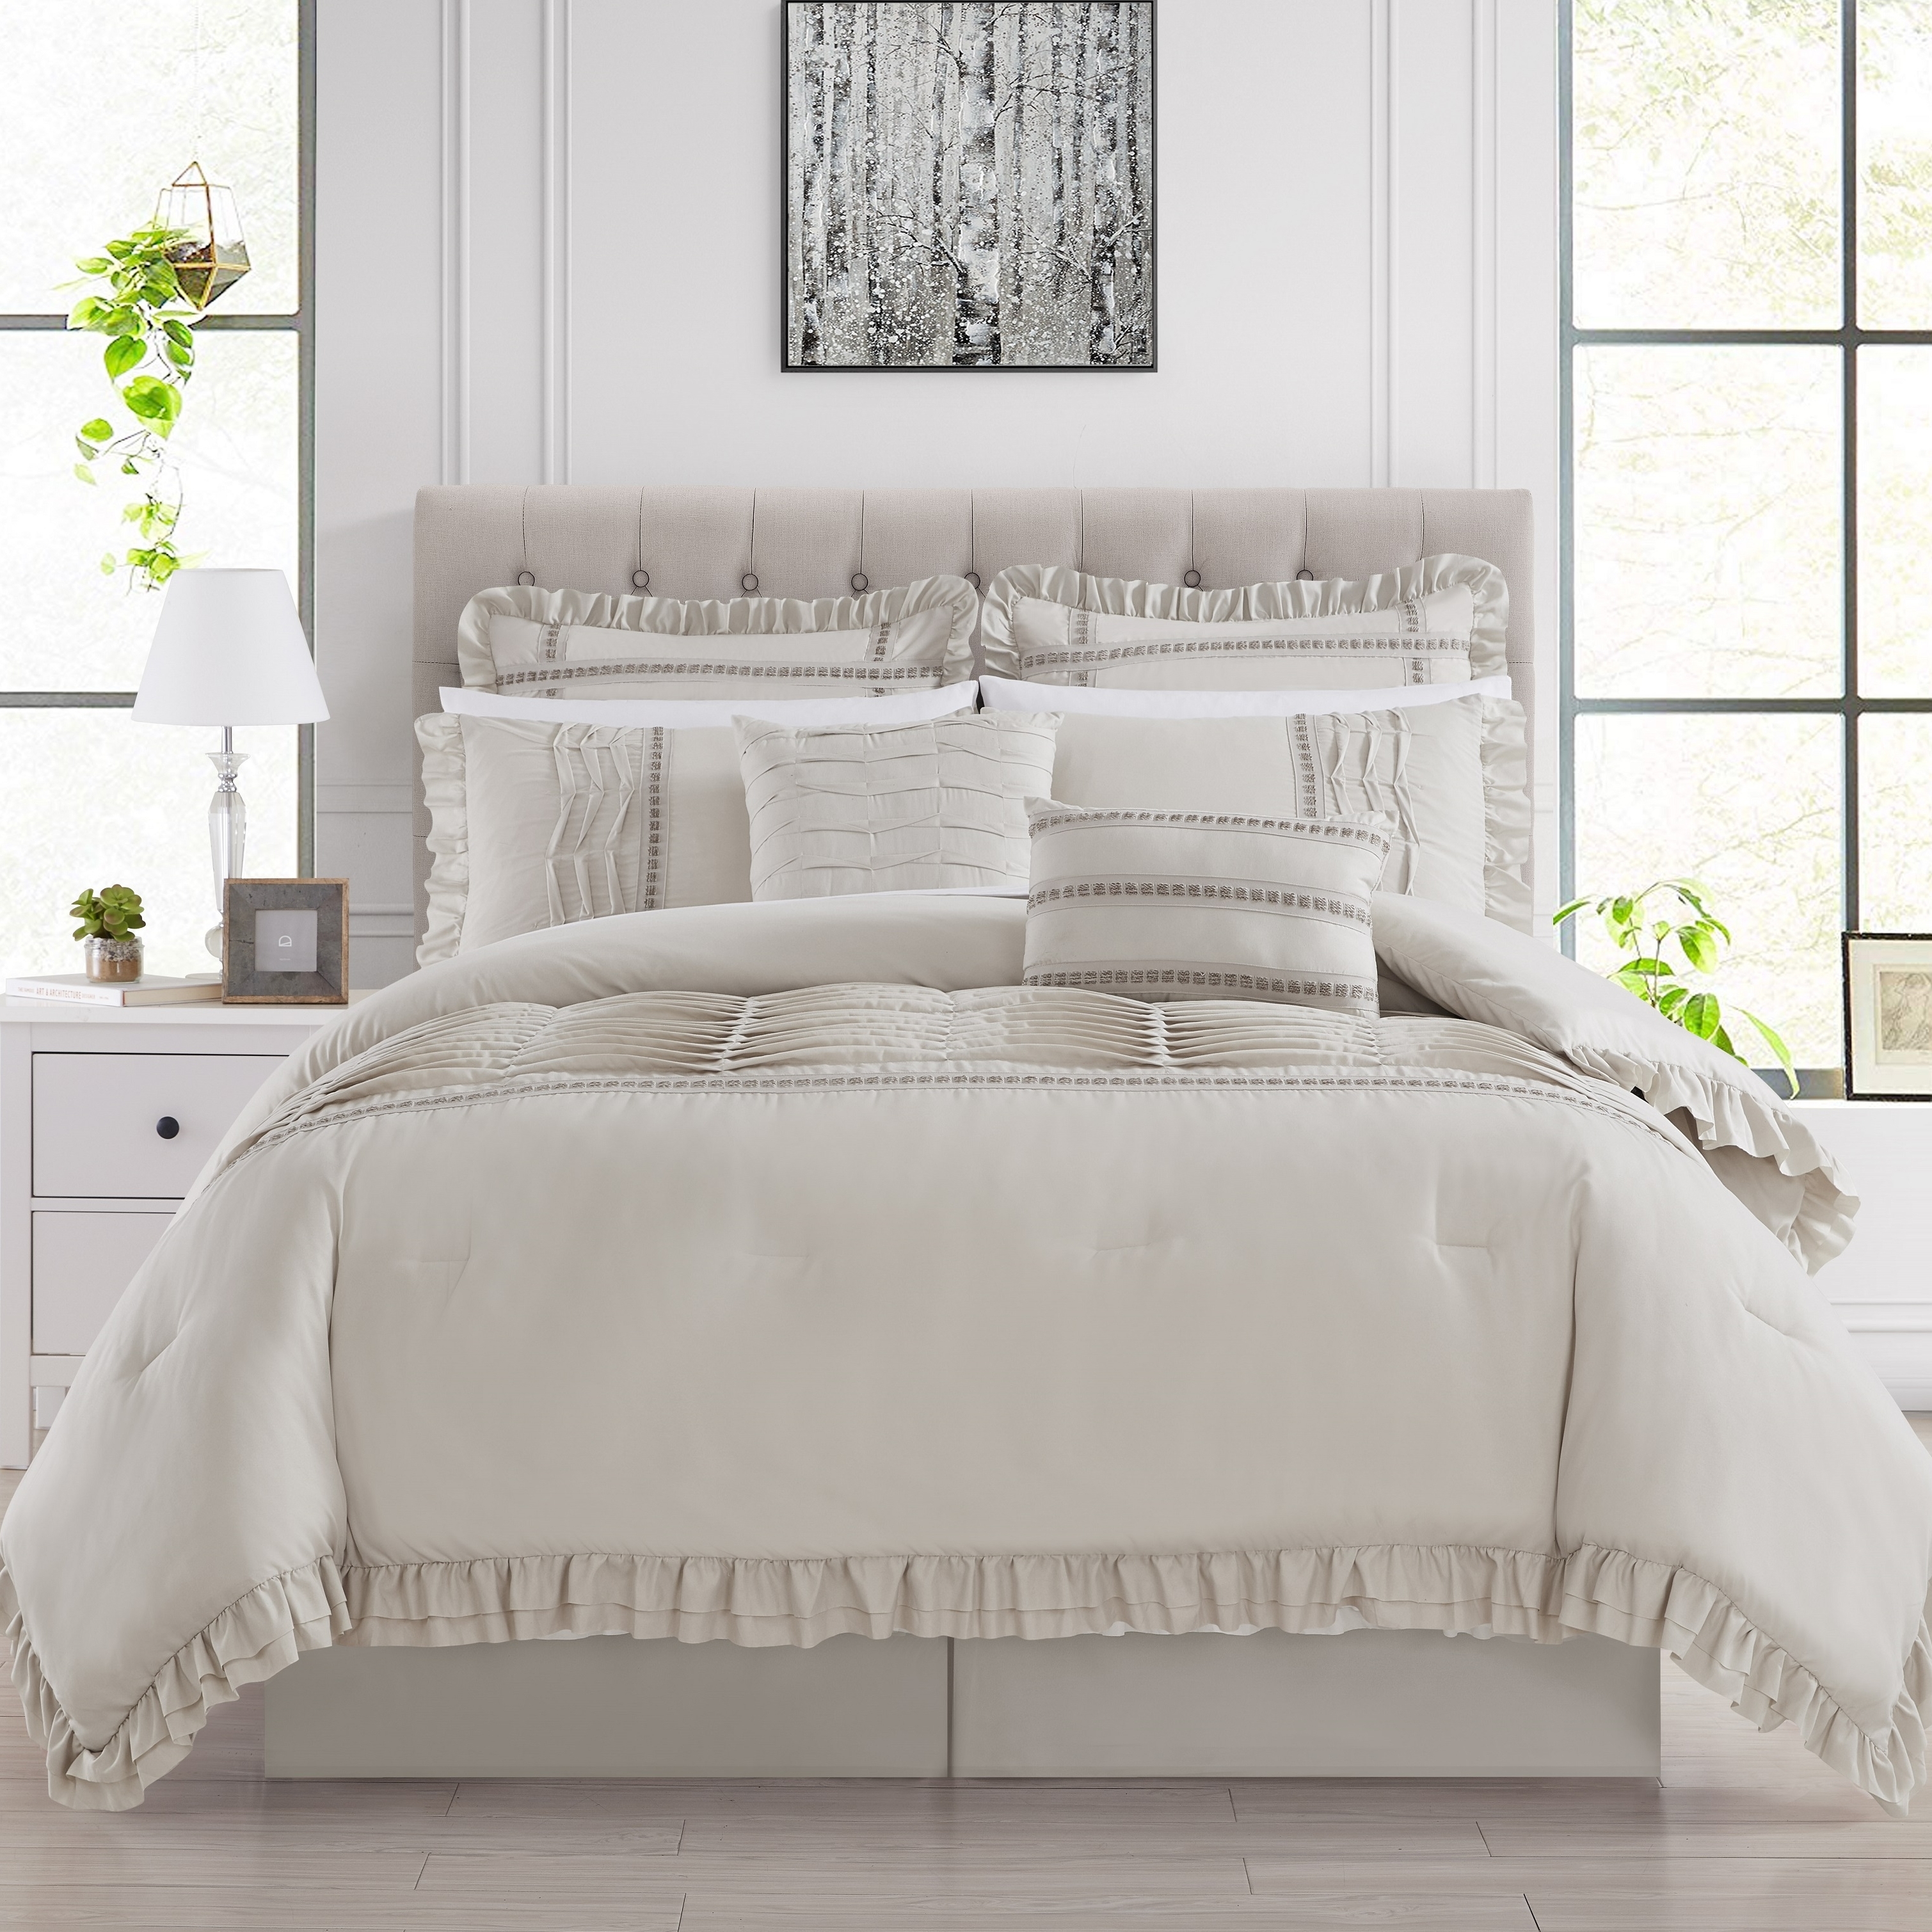 Yvonna 8 Piece Comforter Set Ruffled Pleated Flange Border Design Bedding - Beige, King